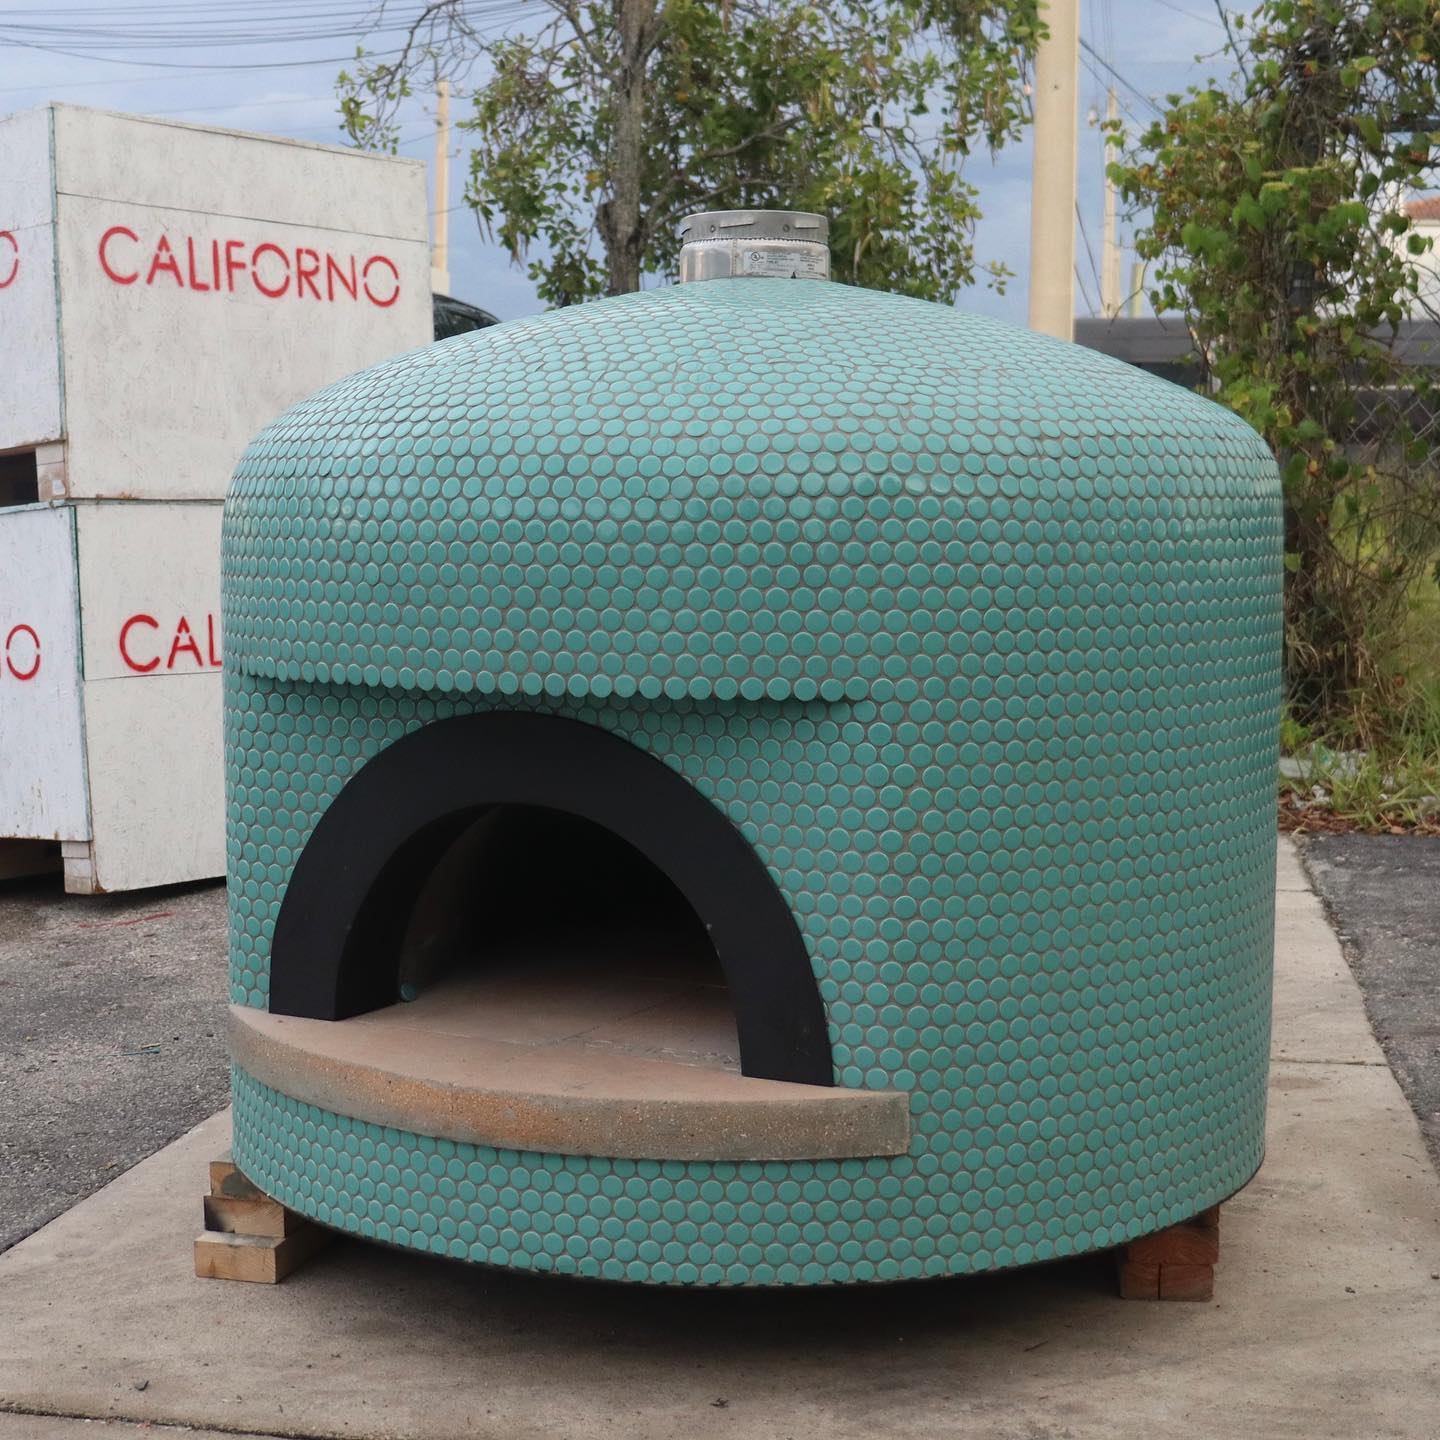 Garzoni Mosaic Pizza Oven Assembled